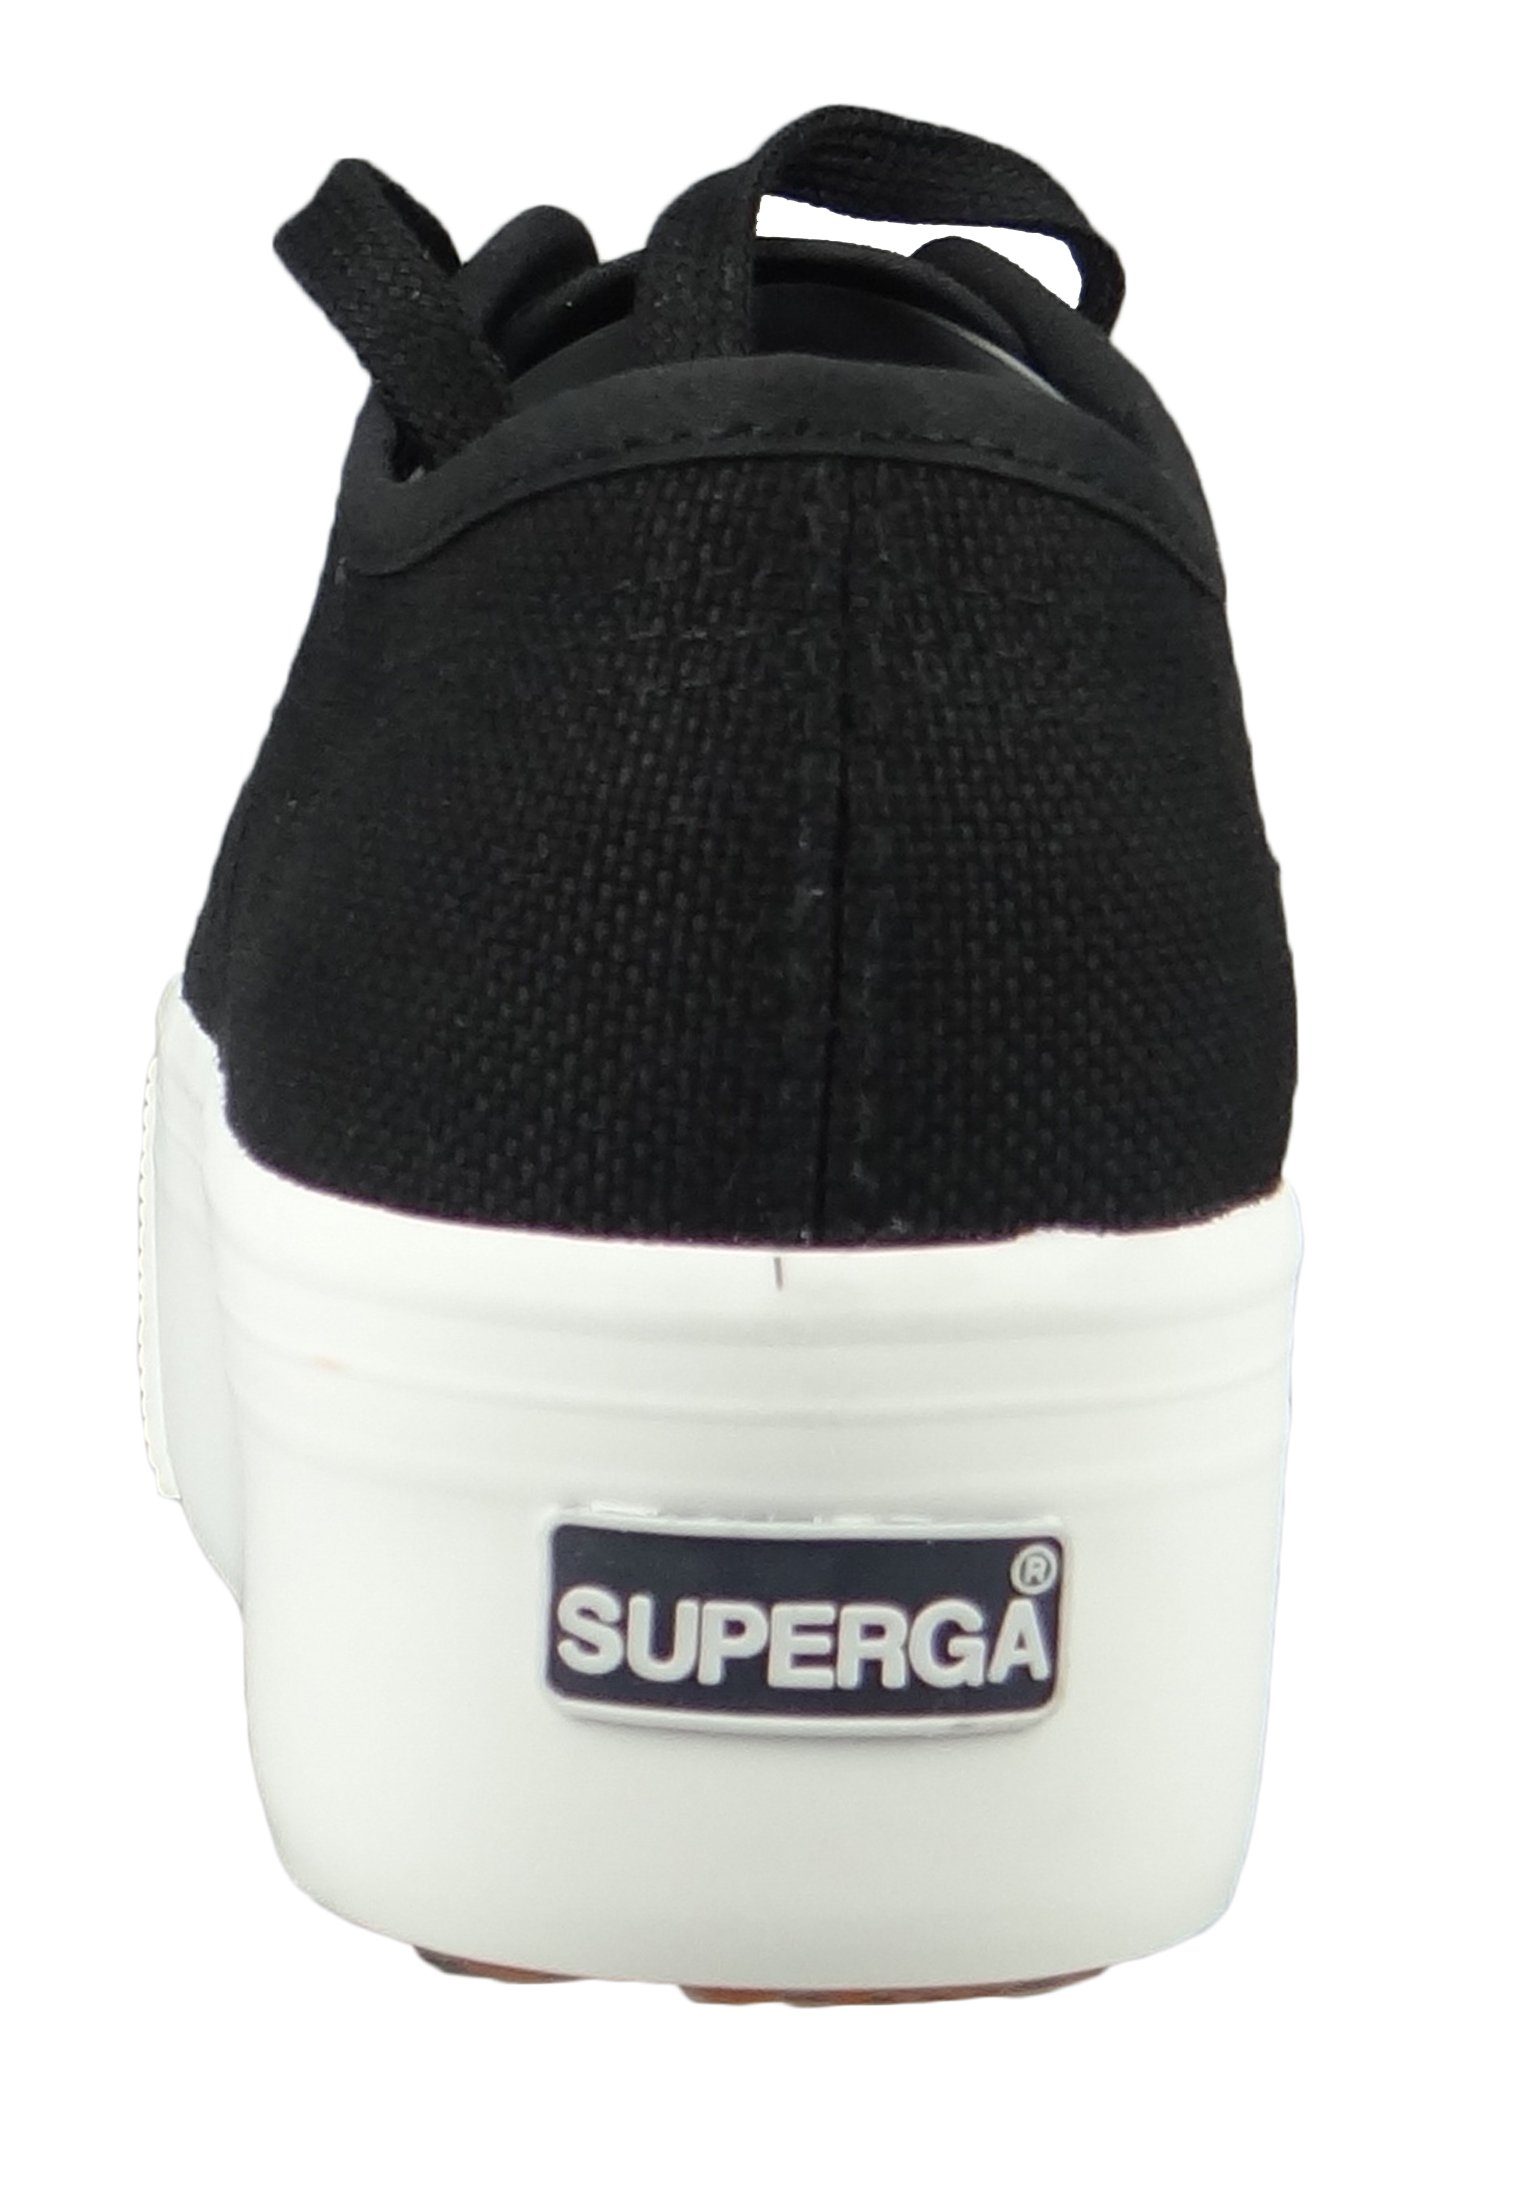 (19801301) Black-Fwhite S9111LW F83 black Superga Sneaker white